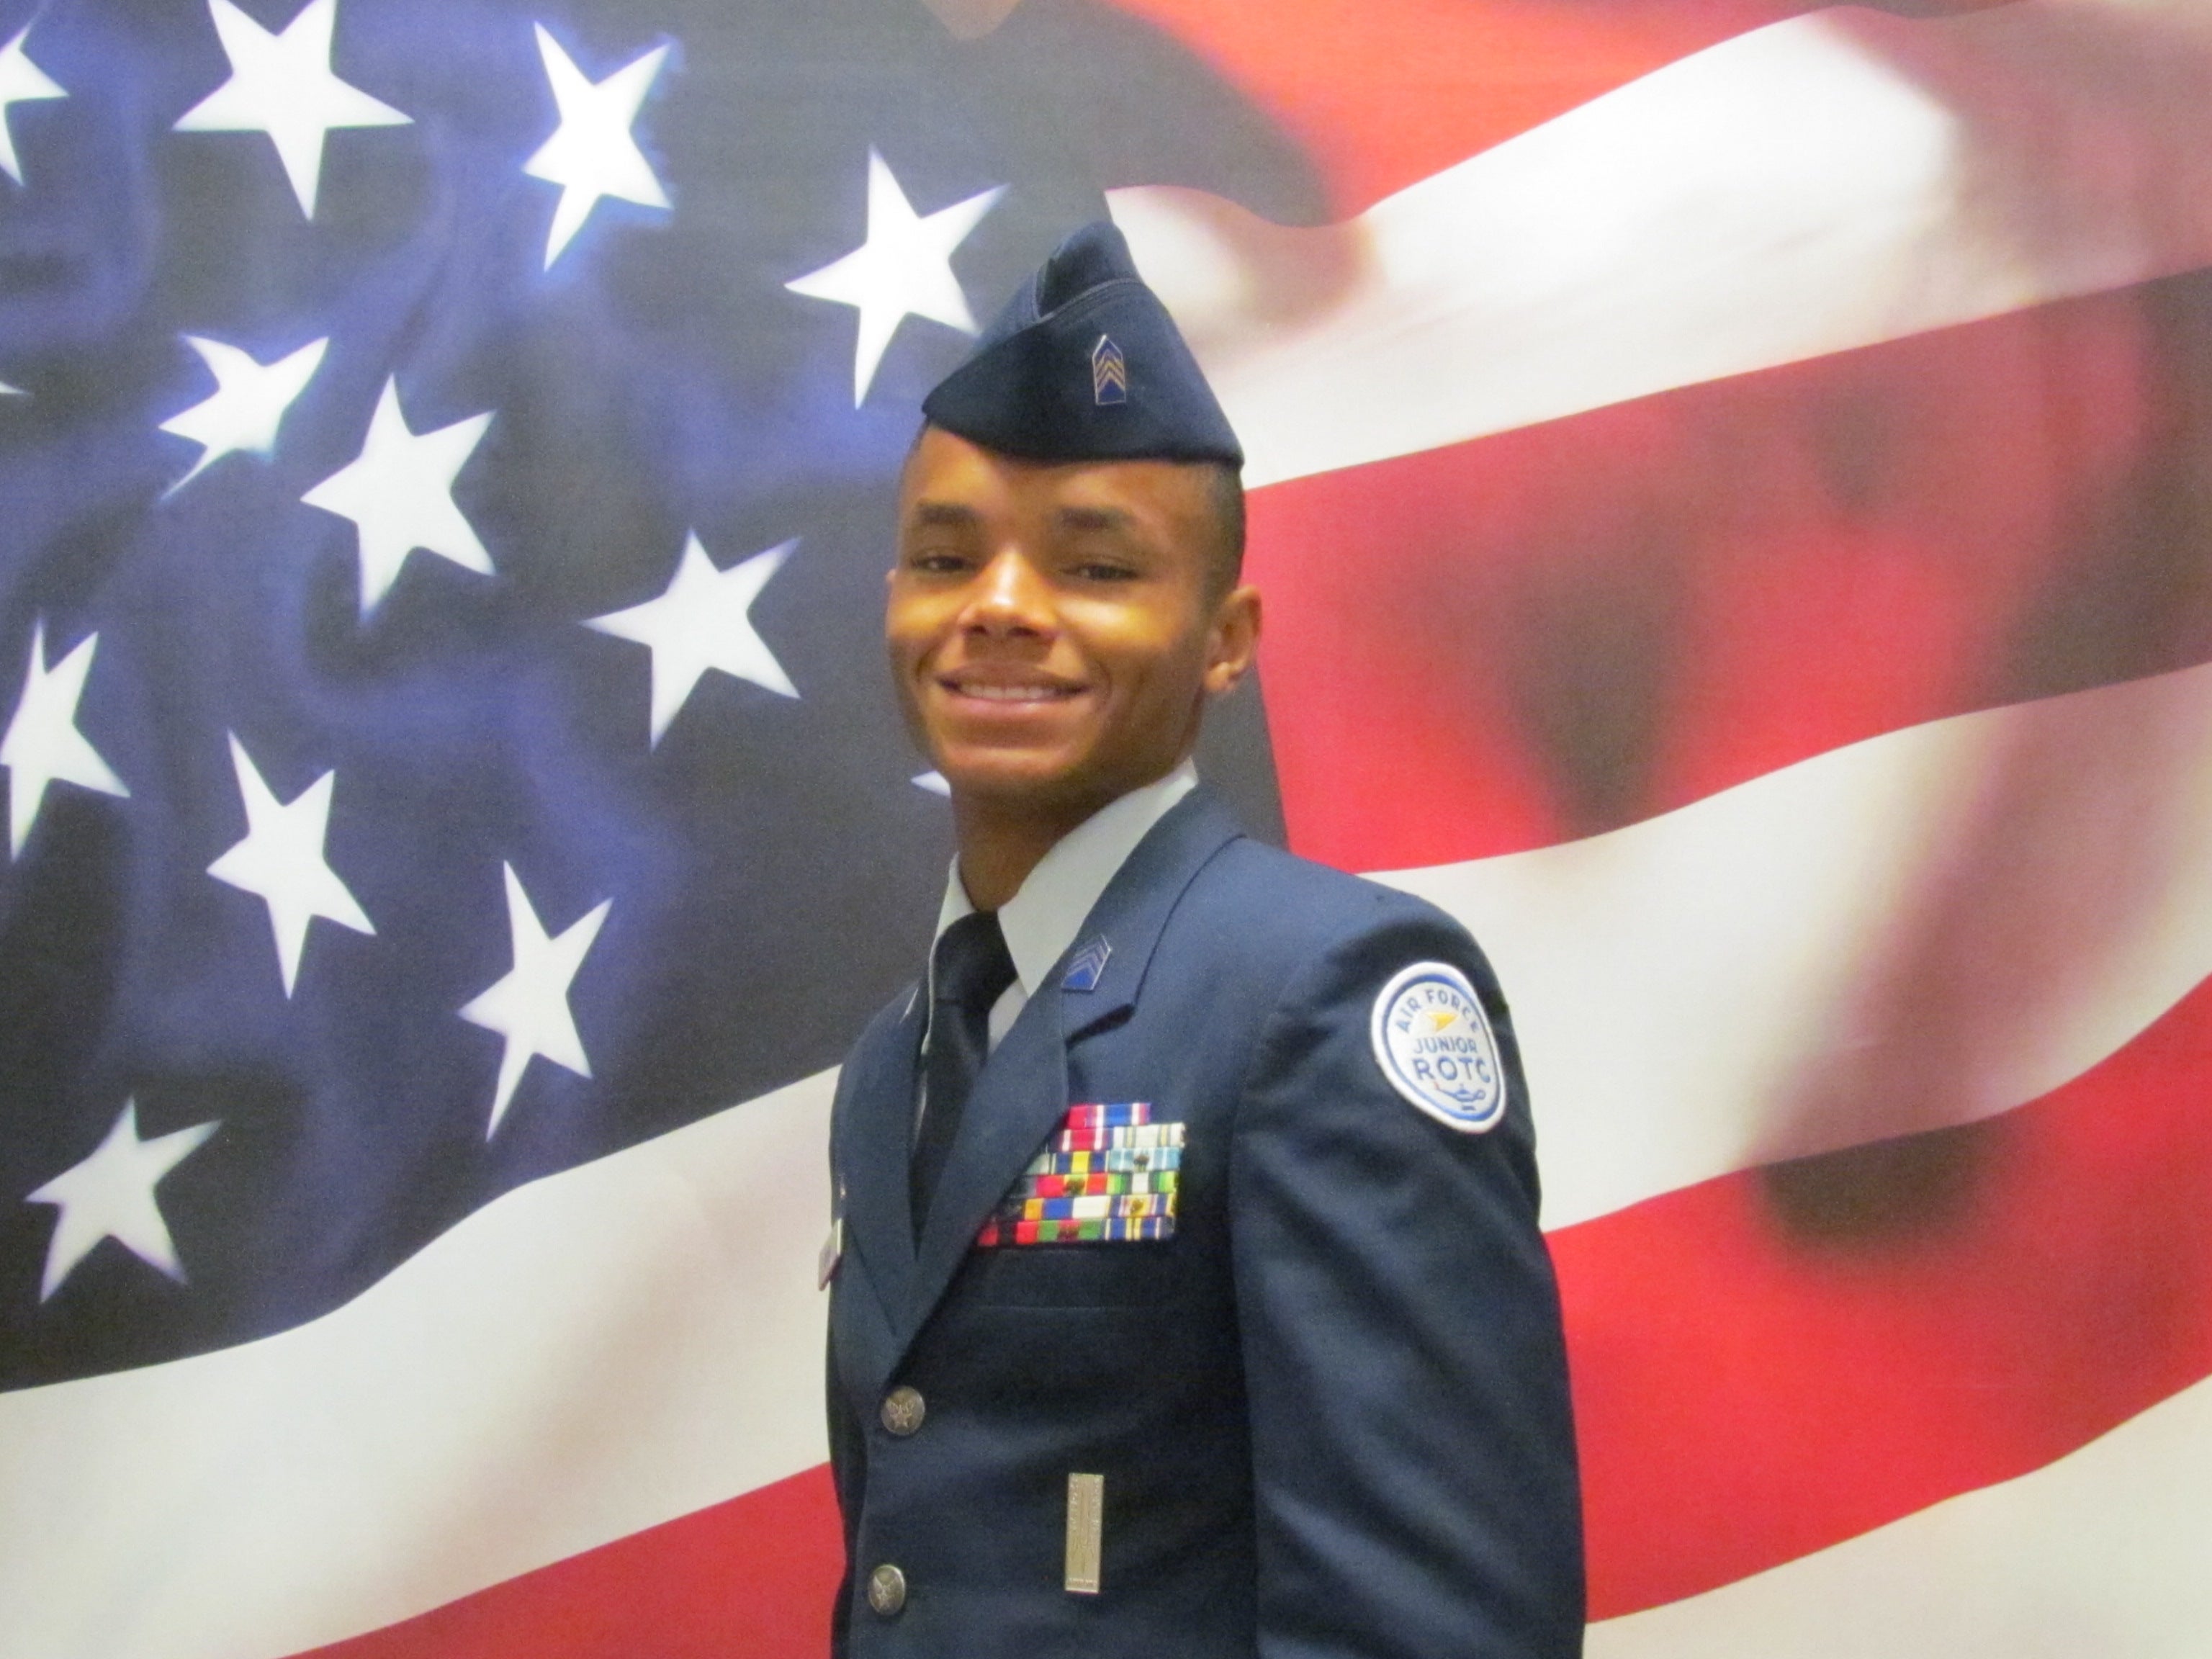 us air force junior rotc